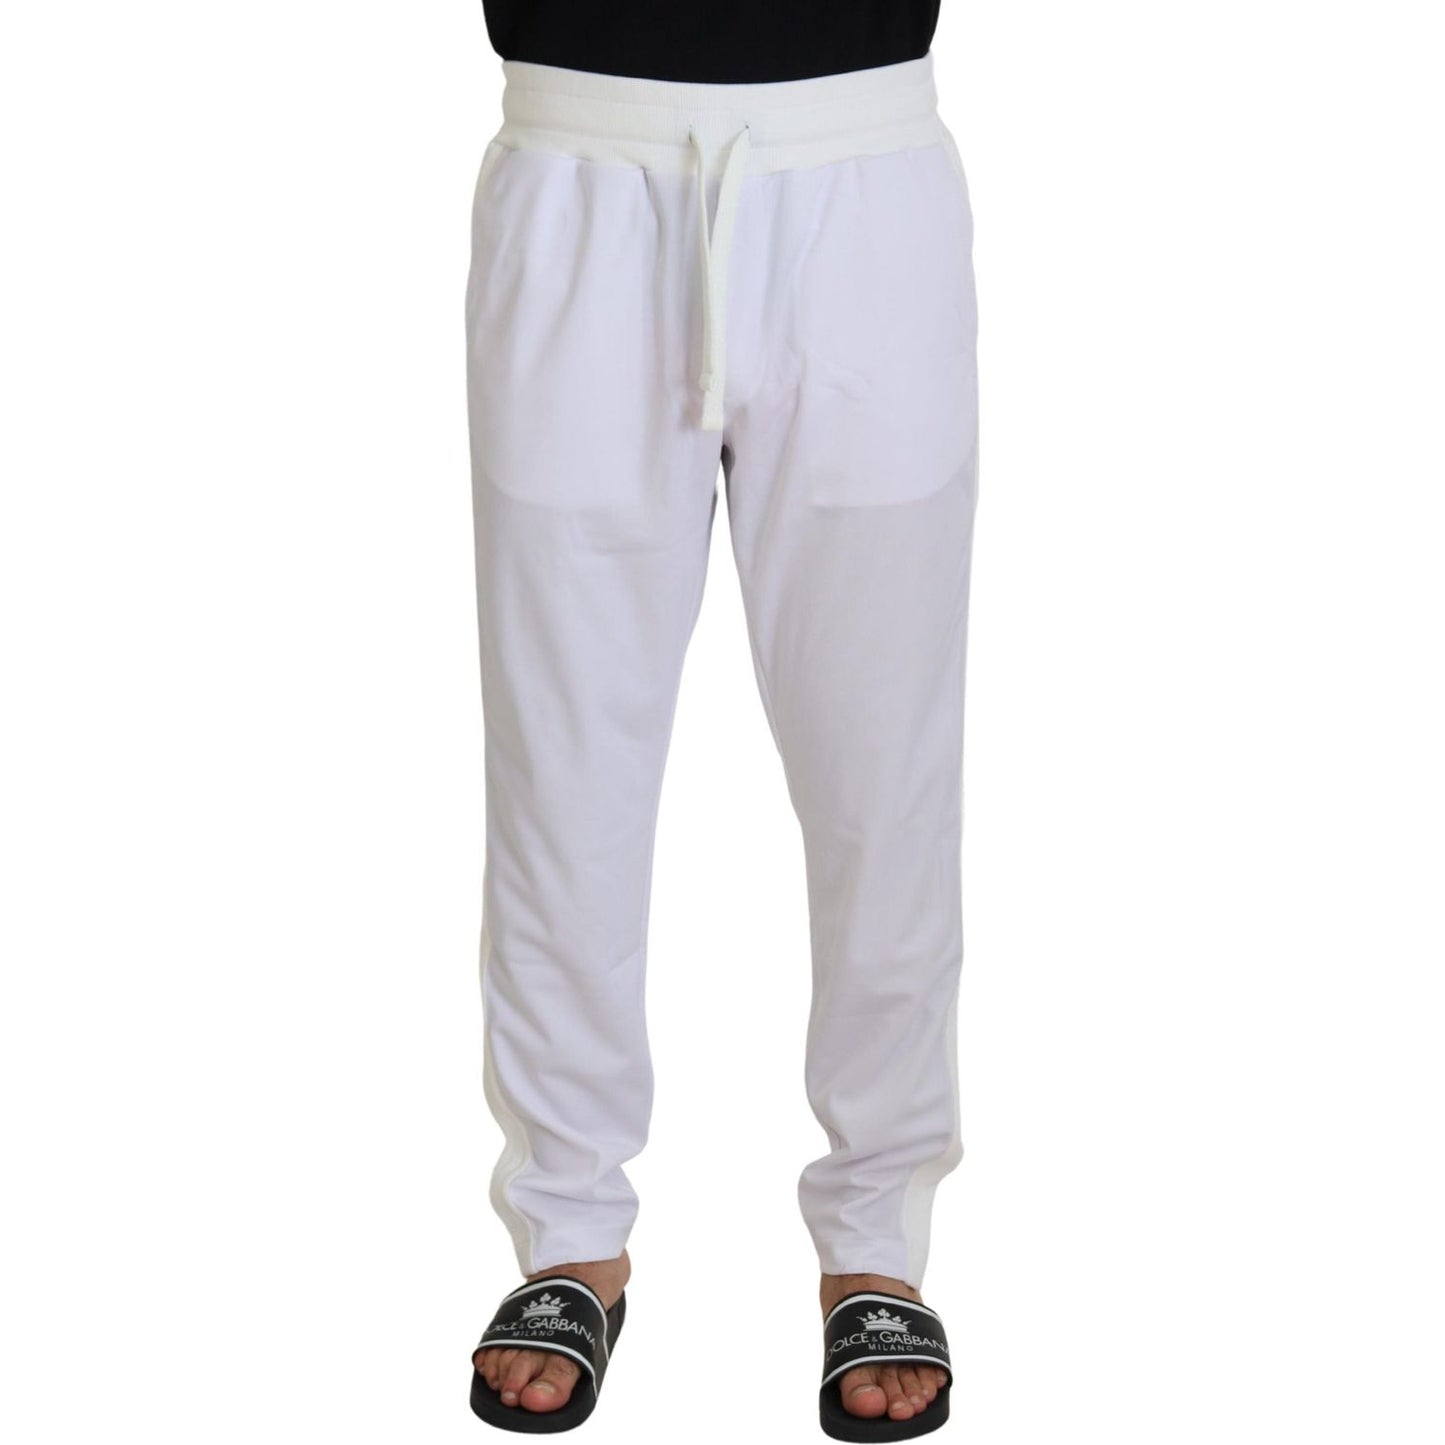 Elegant White Jogger Pants for Sophisticated Comfort